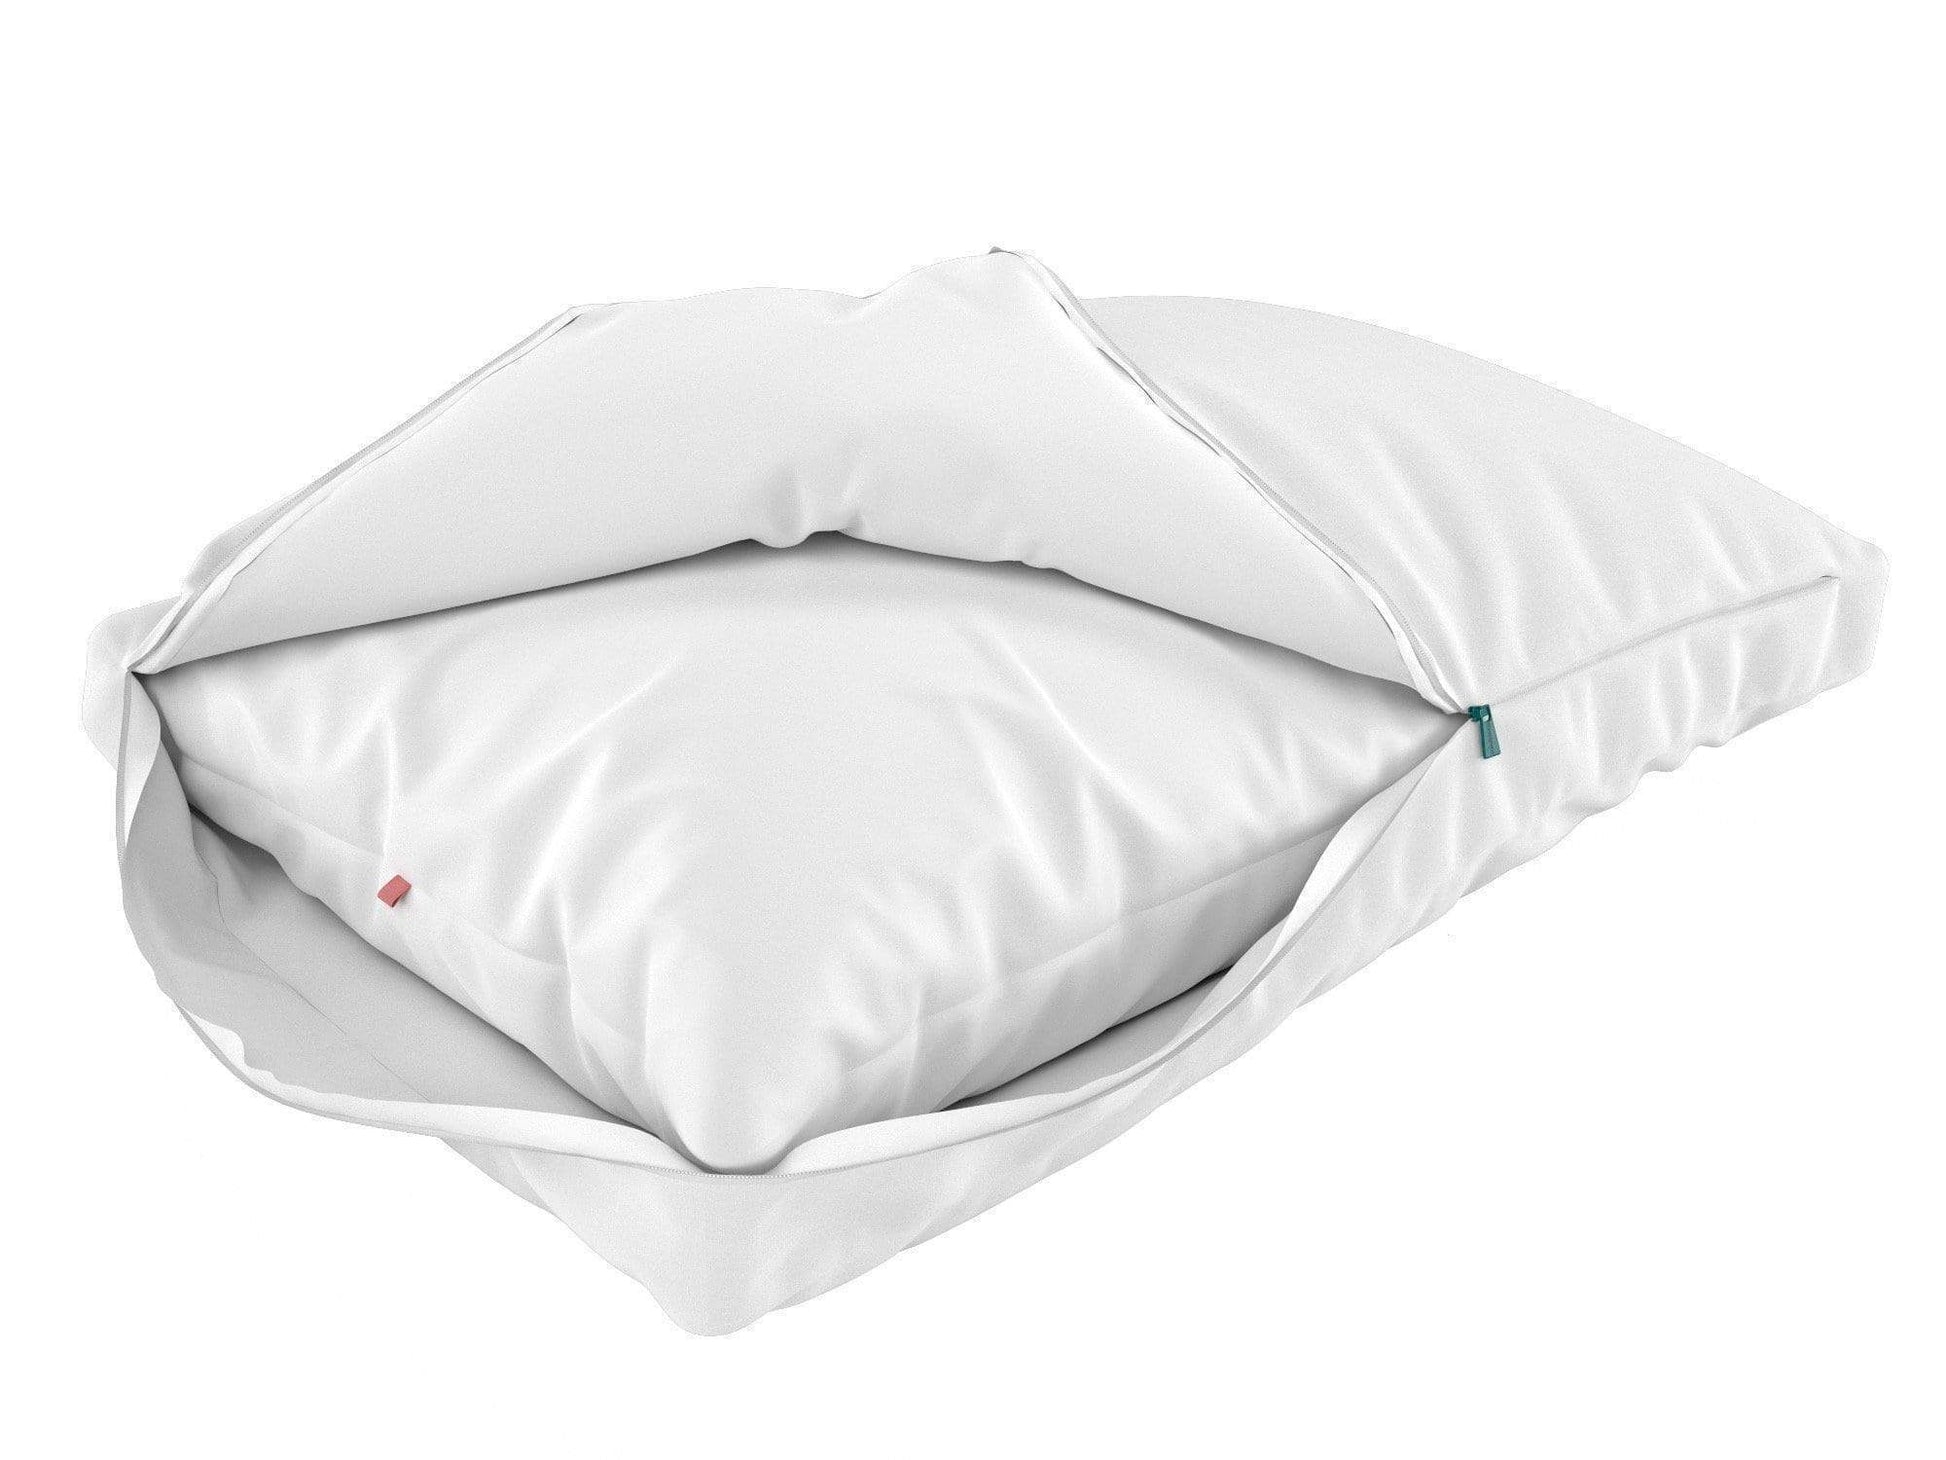 Sleepgram Pillow opened (soft)